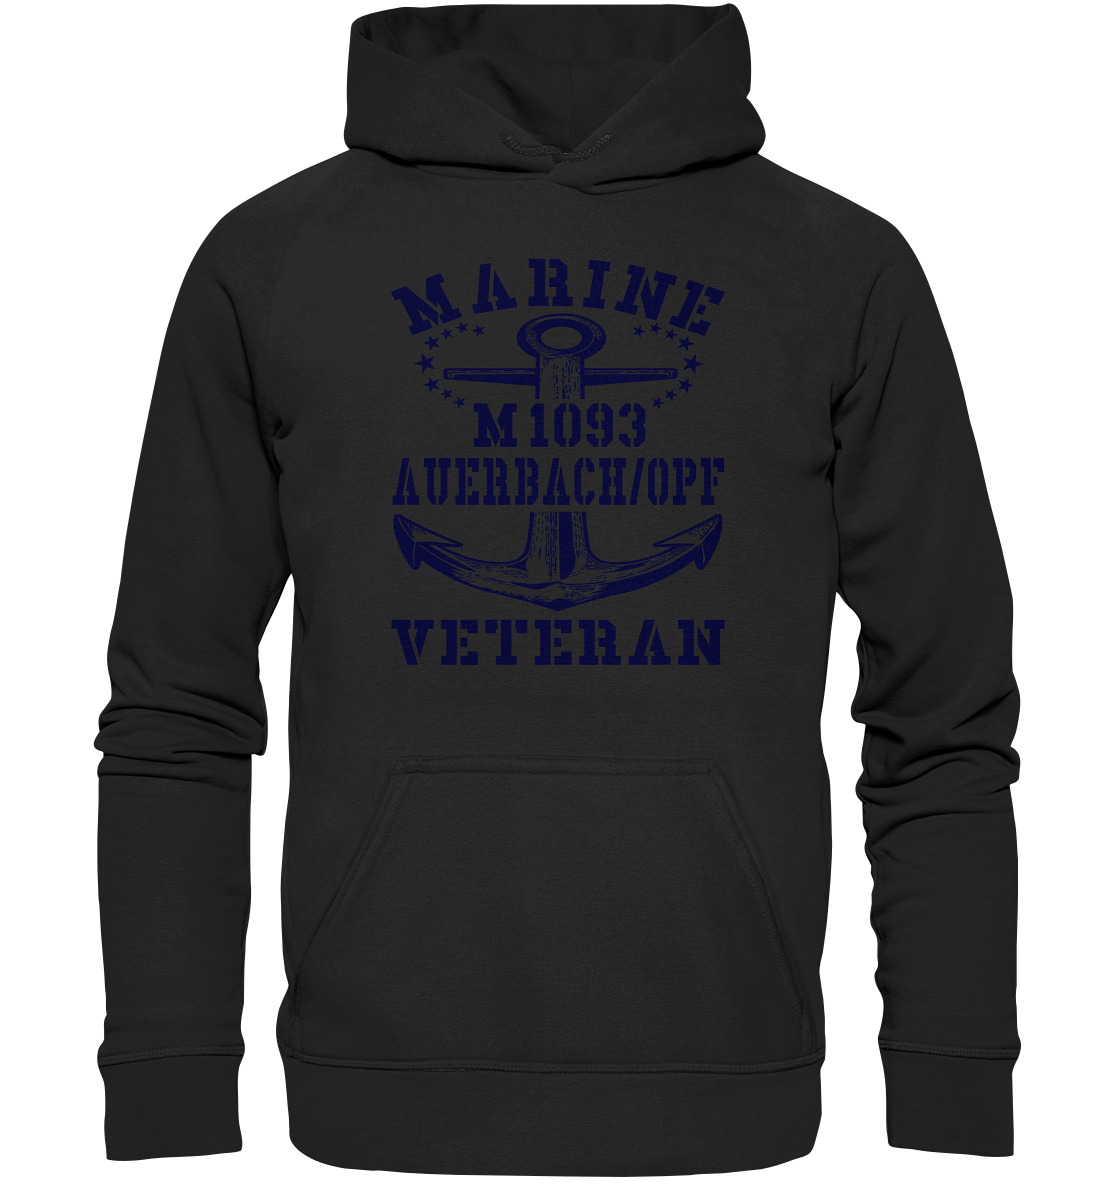 M1093 AUERBACH/OPF Marine Veteran - Basic Unisex Hoodie